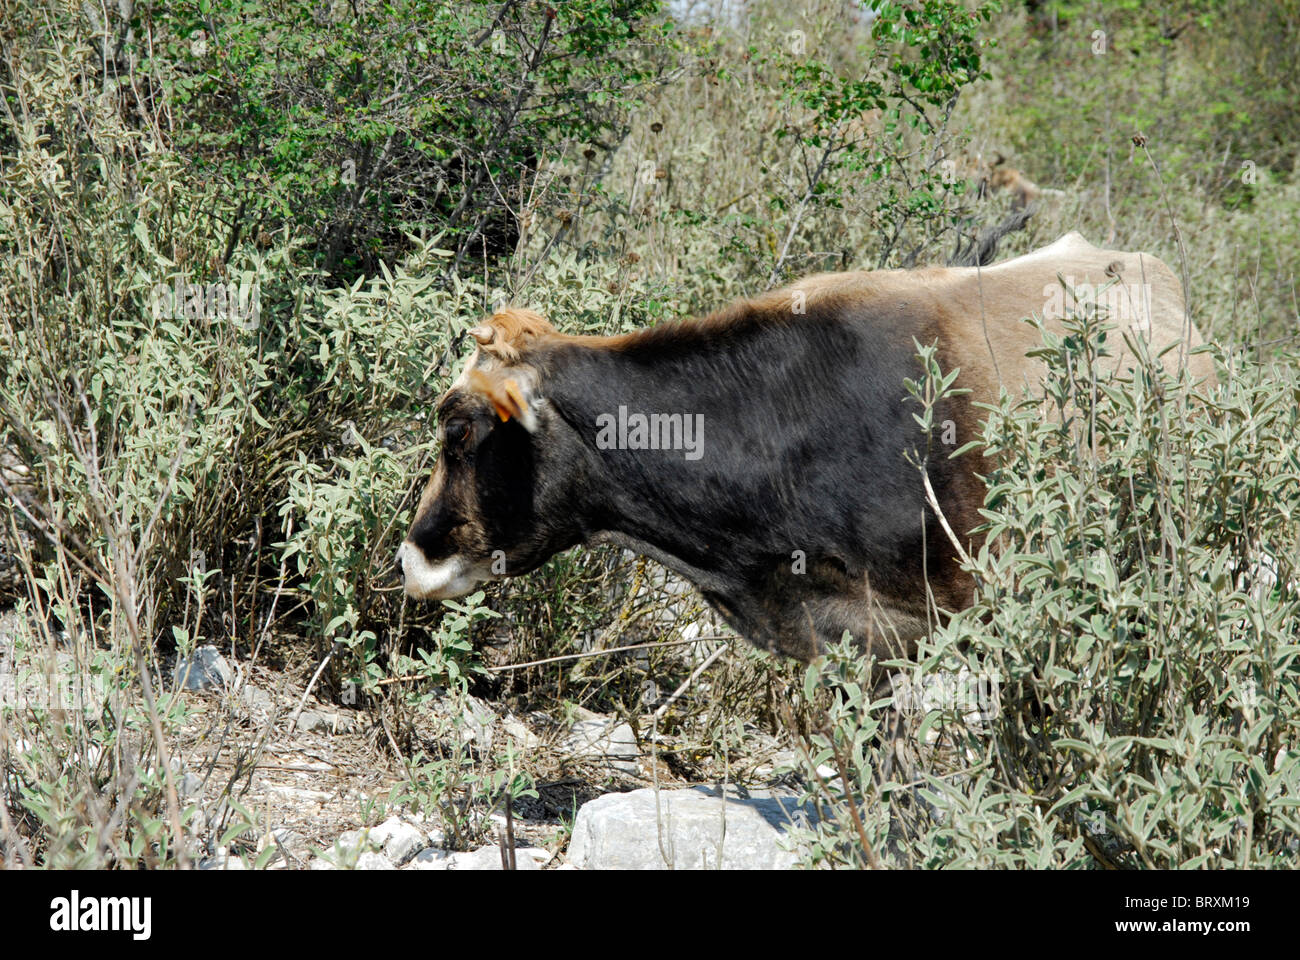 Cattle grazing on Scrubland, Epirus, Greece. Near to the River Louros and the Amvrakikos Gulf. Stock Photo